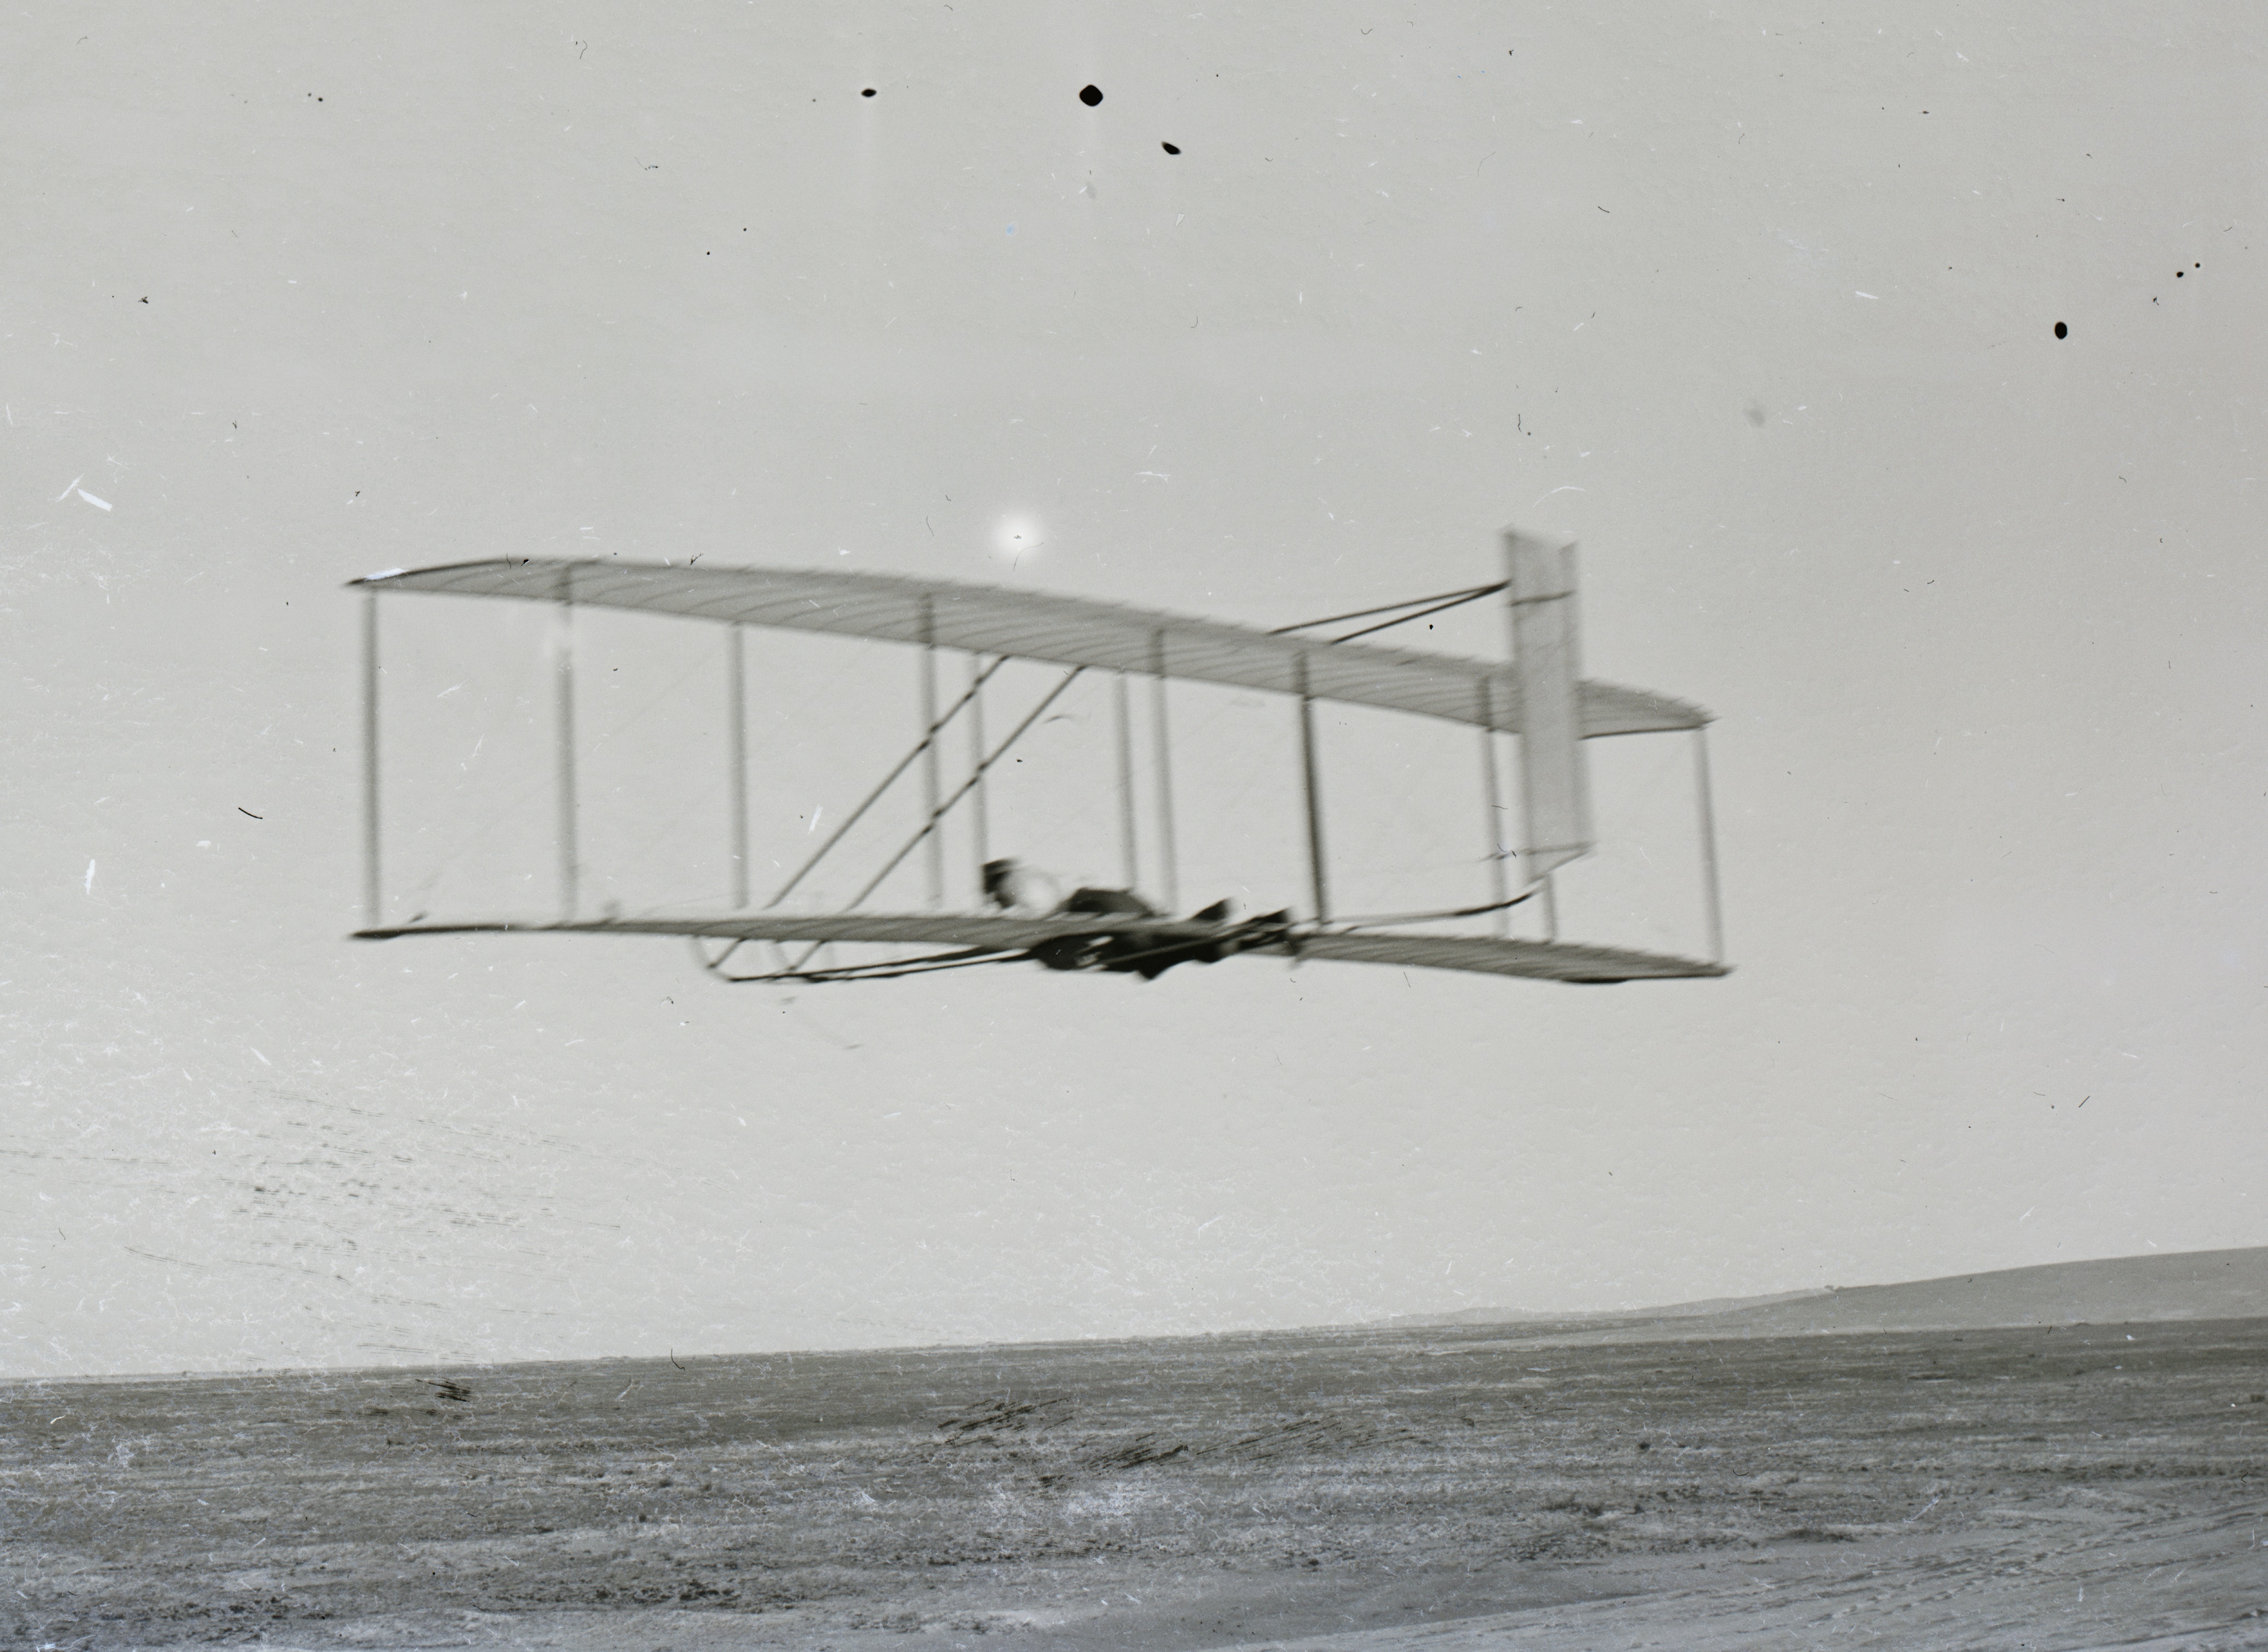 1902 Wright Glider in level flight